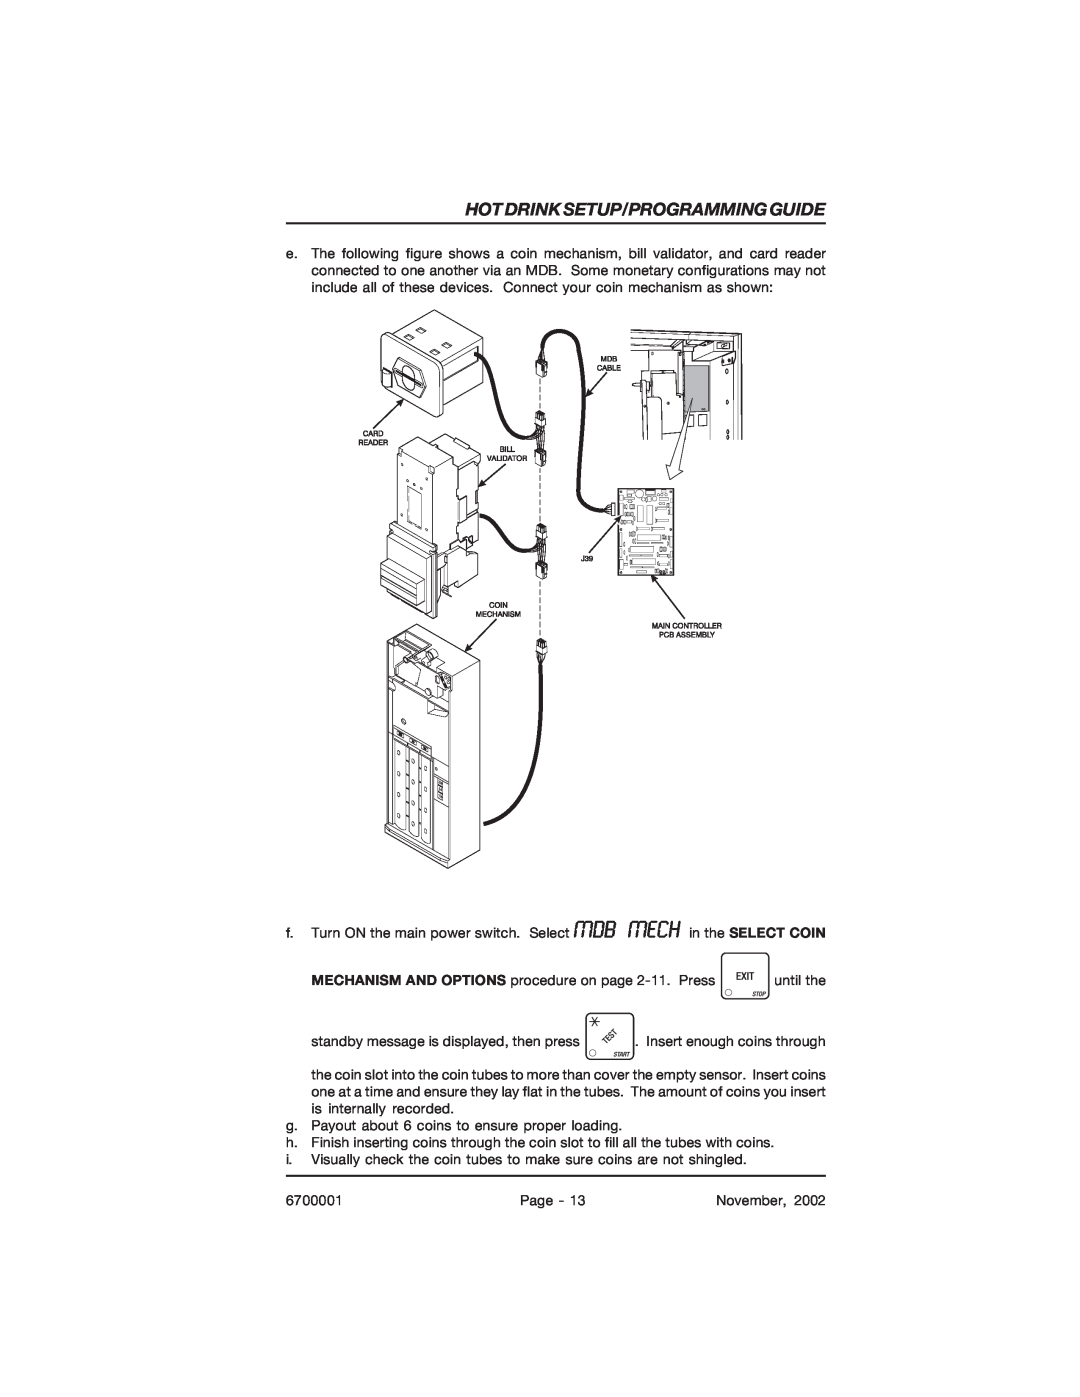 Crane Merchandising Systems 678, 670 manual Hot Drink Setup/Programming Guide 